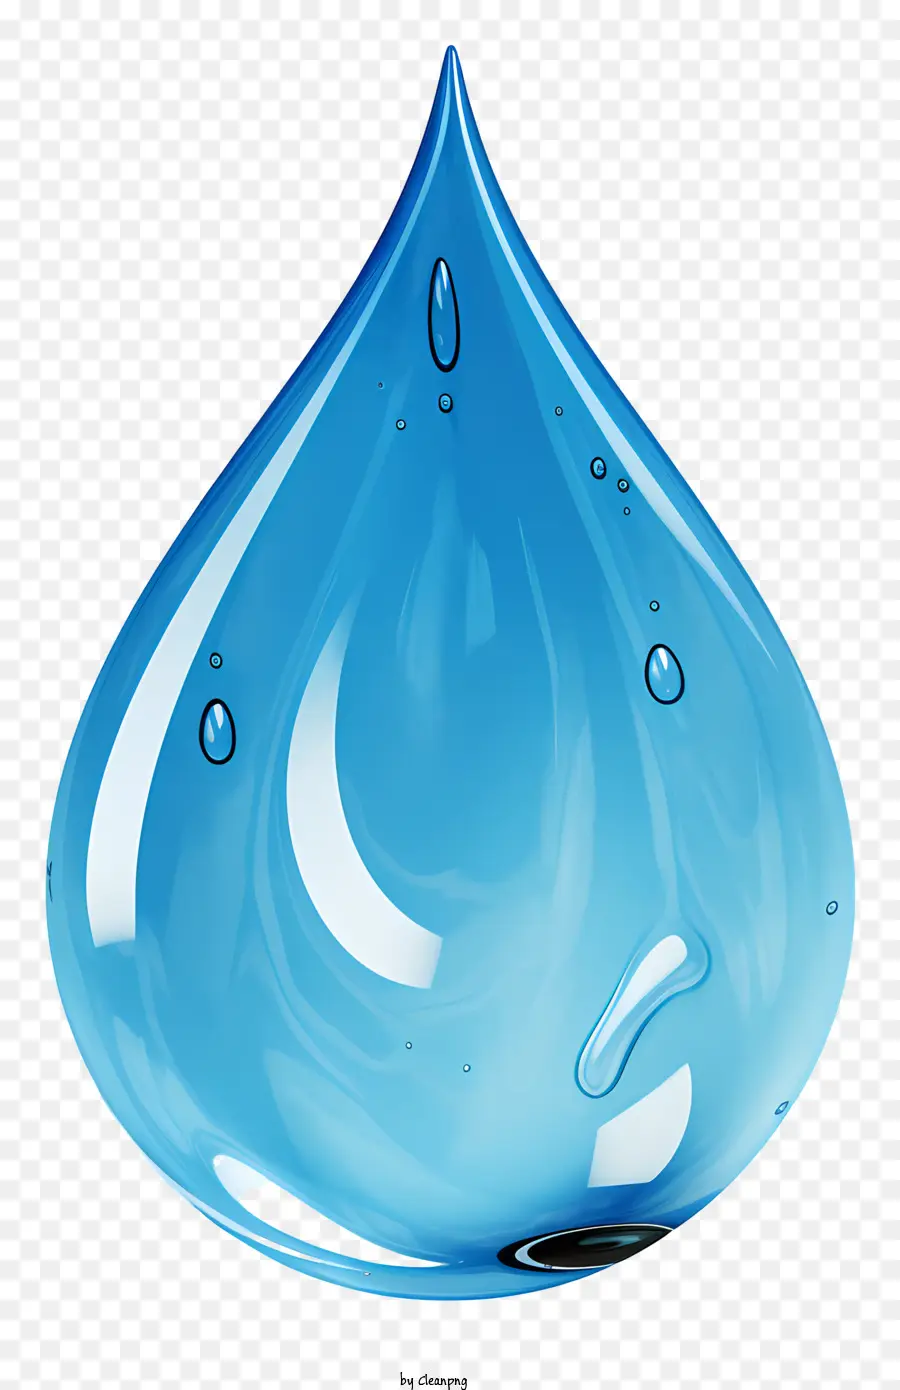 goccia d'acqua - Caduta d'acqua trasparente affettata con superficie riflettente